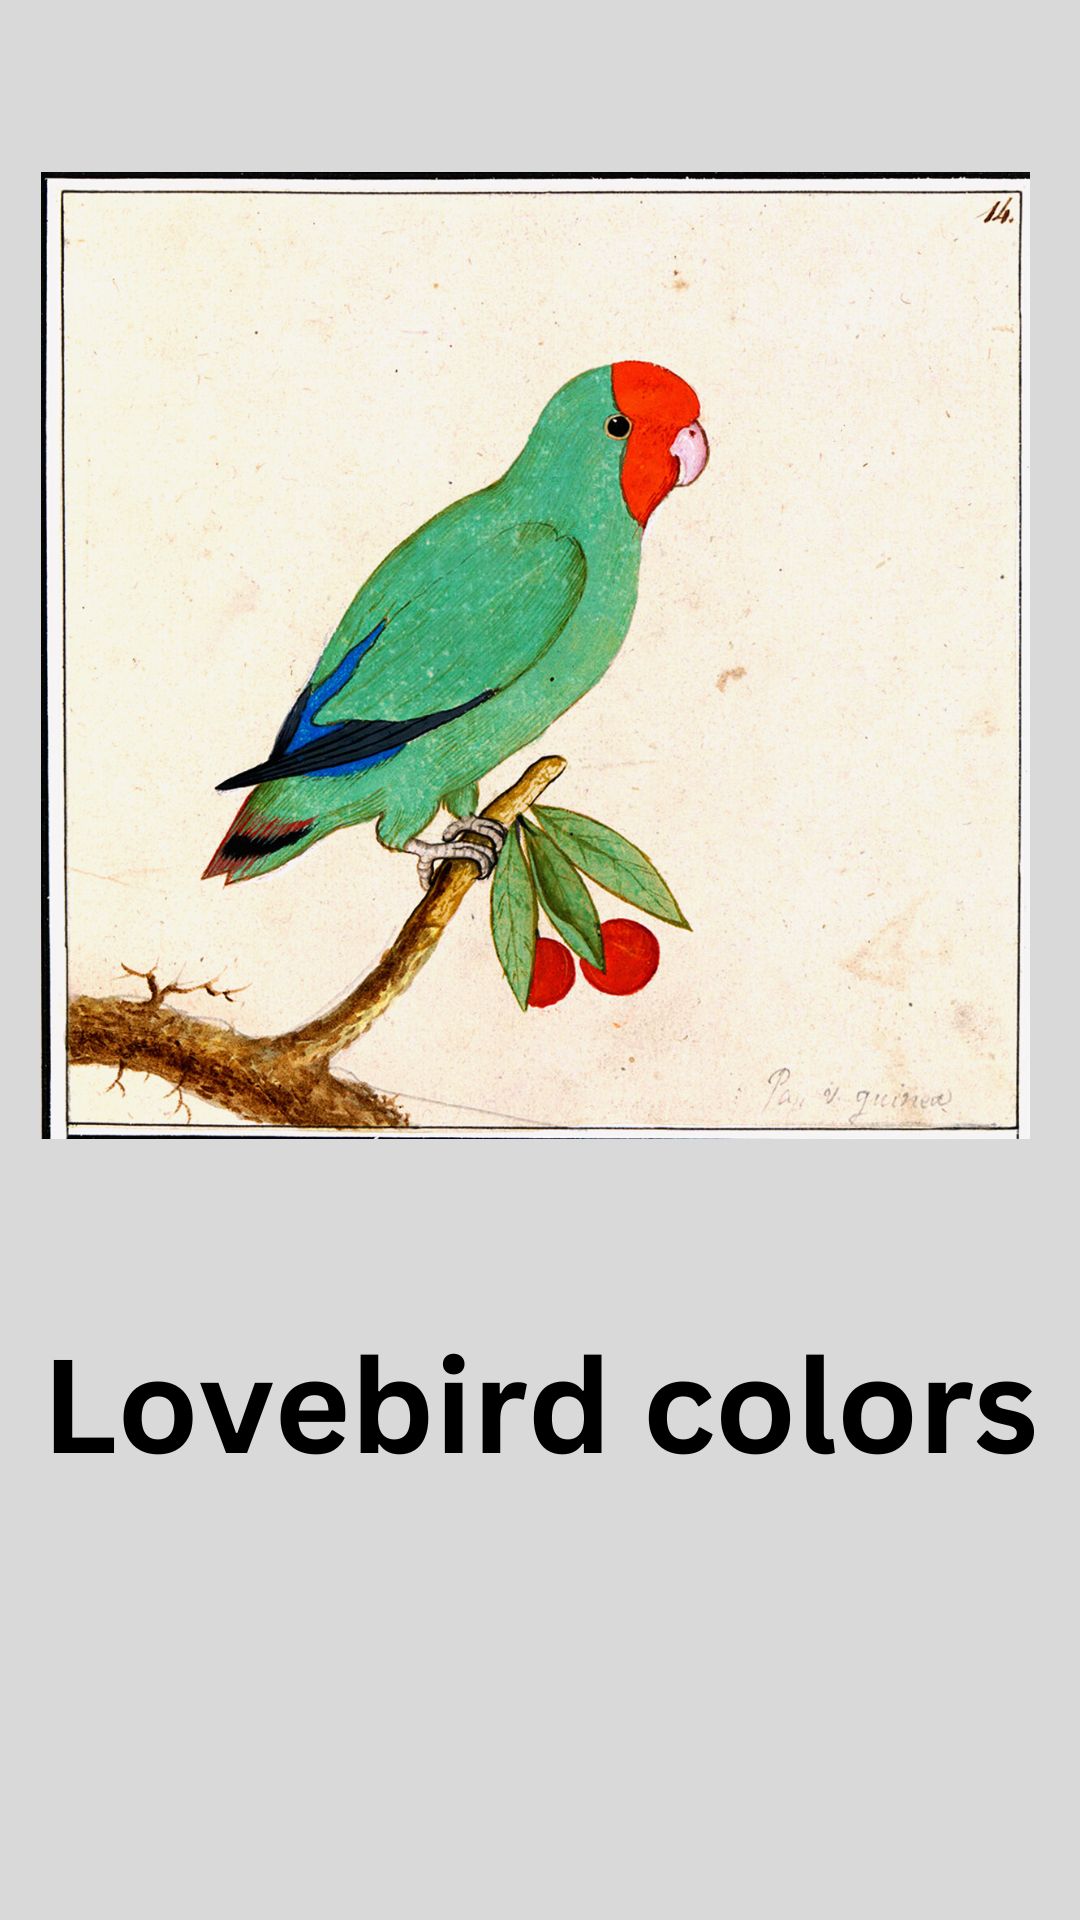 Lovebird colors